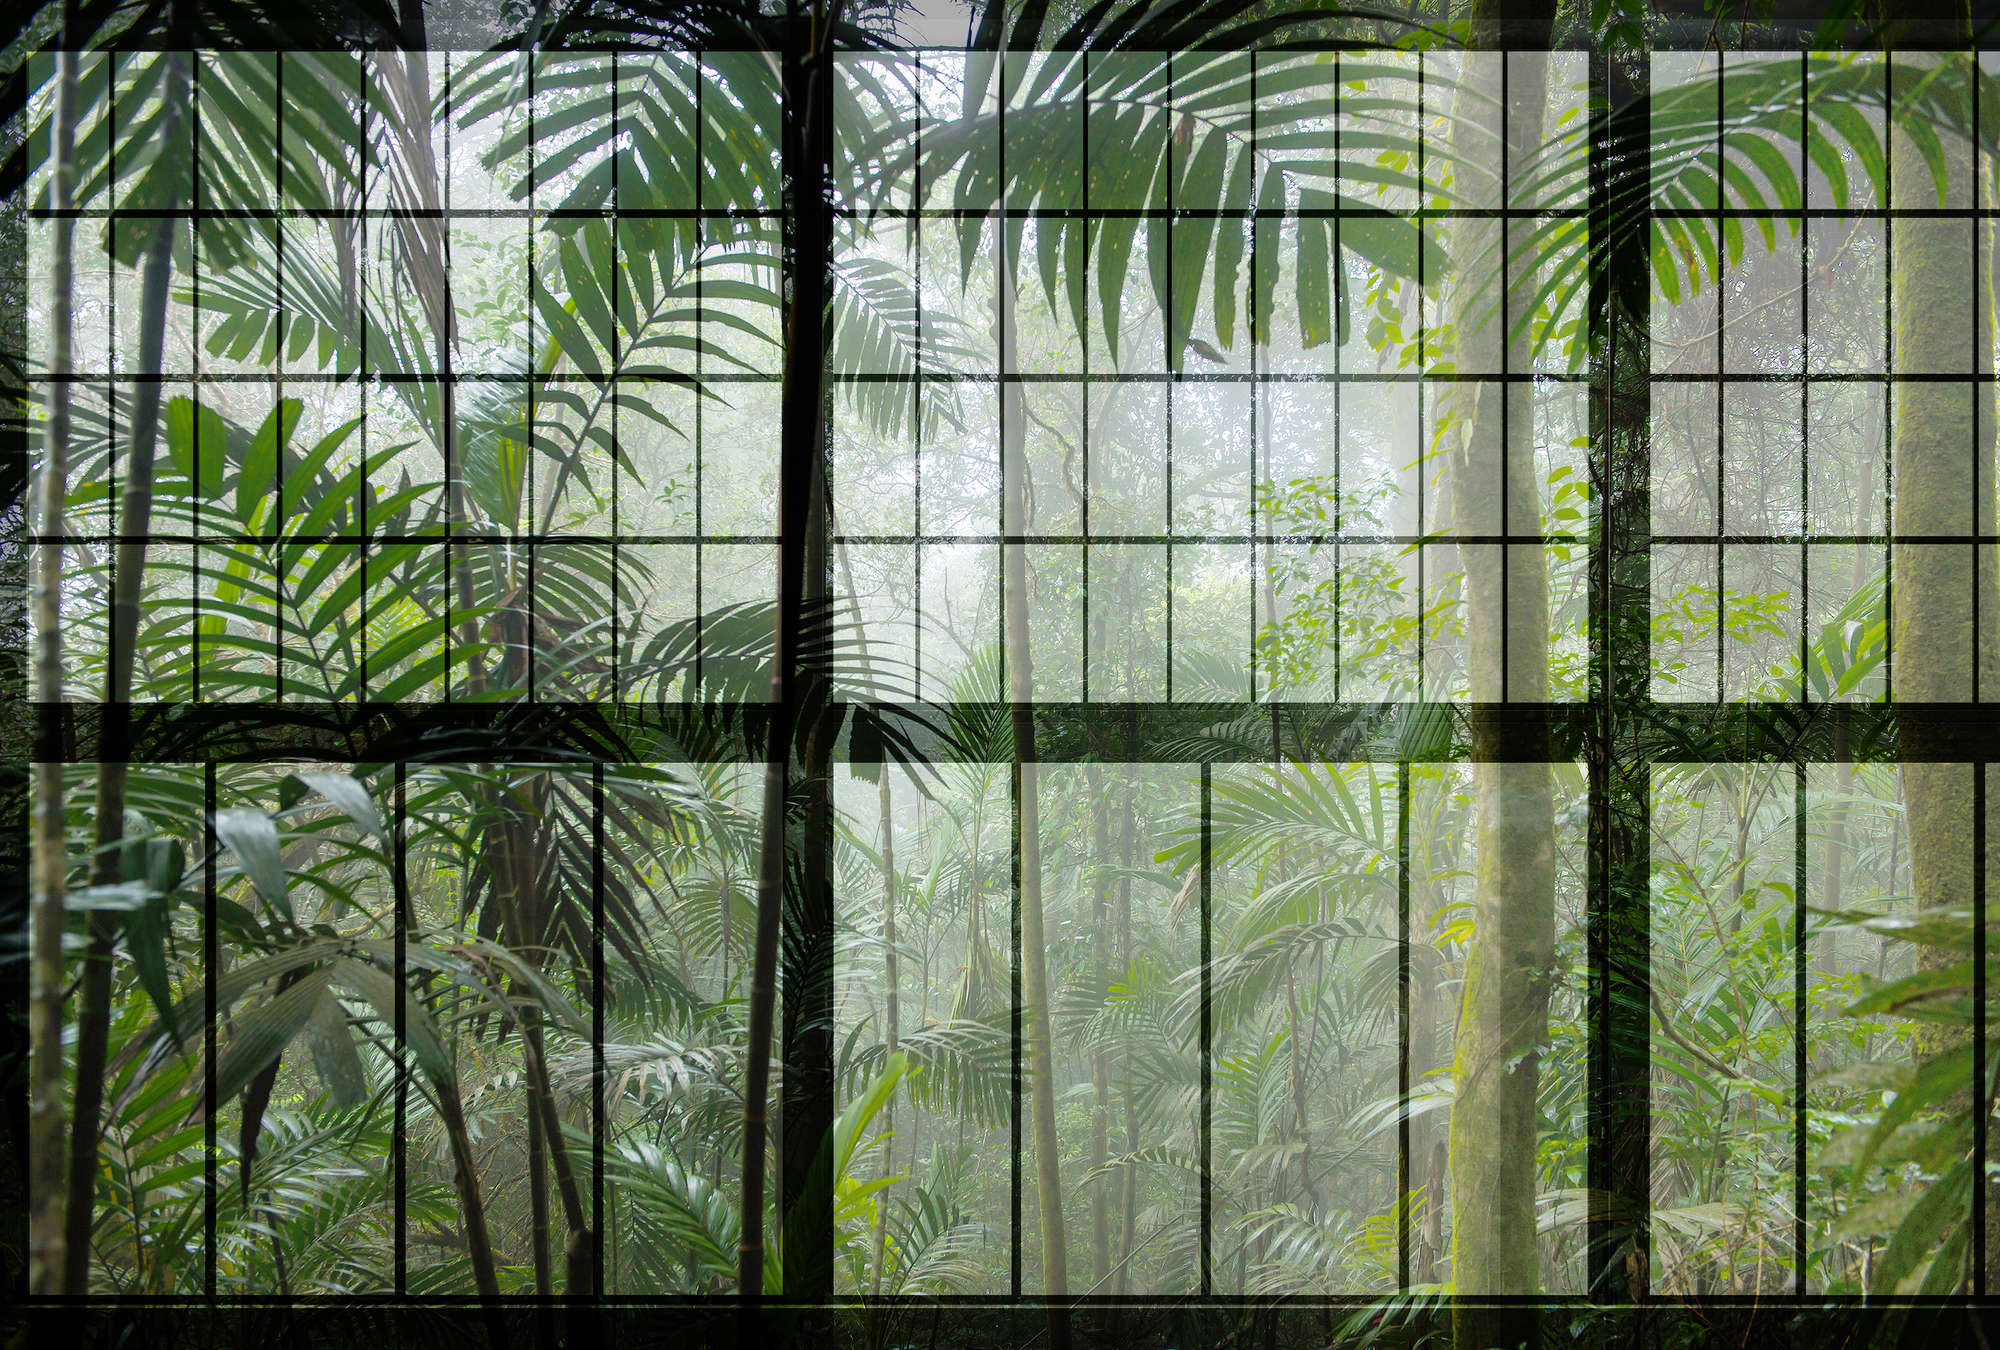             Rainforest 1 - Loft window mural with jungle view - Green, Black | Pearl smooth fleece
        